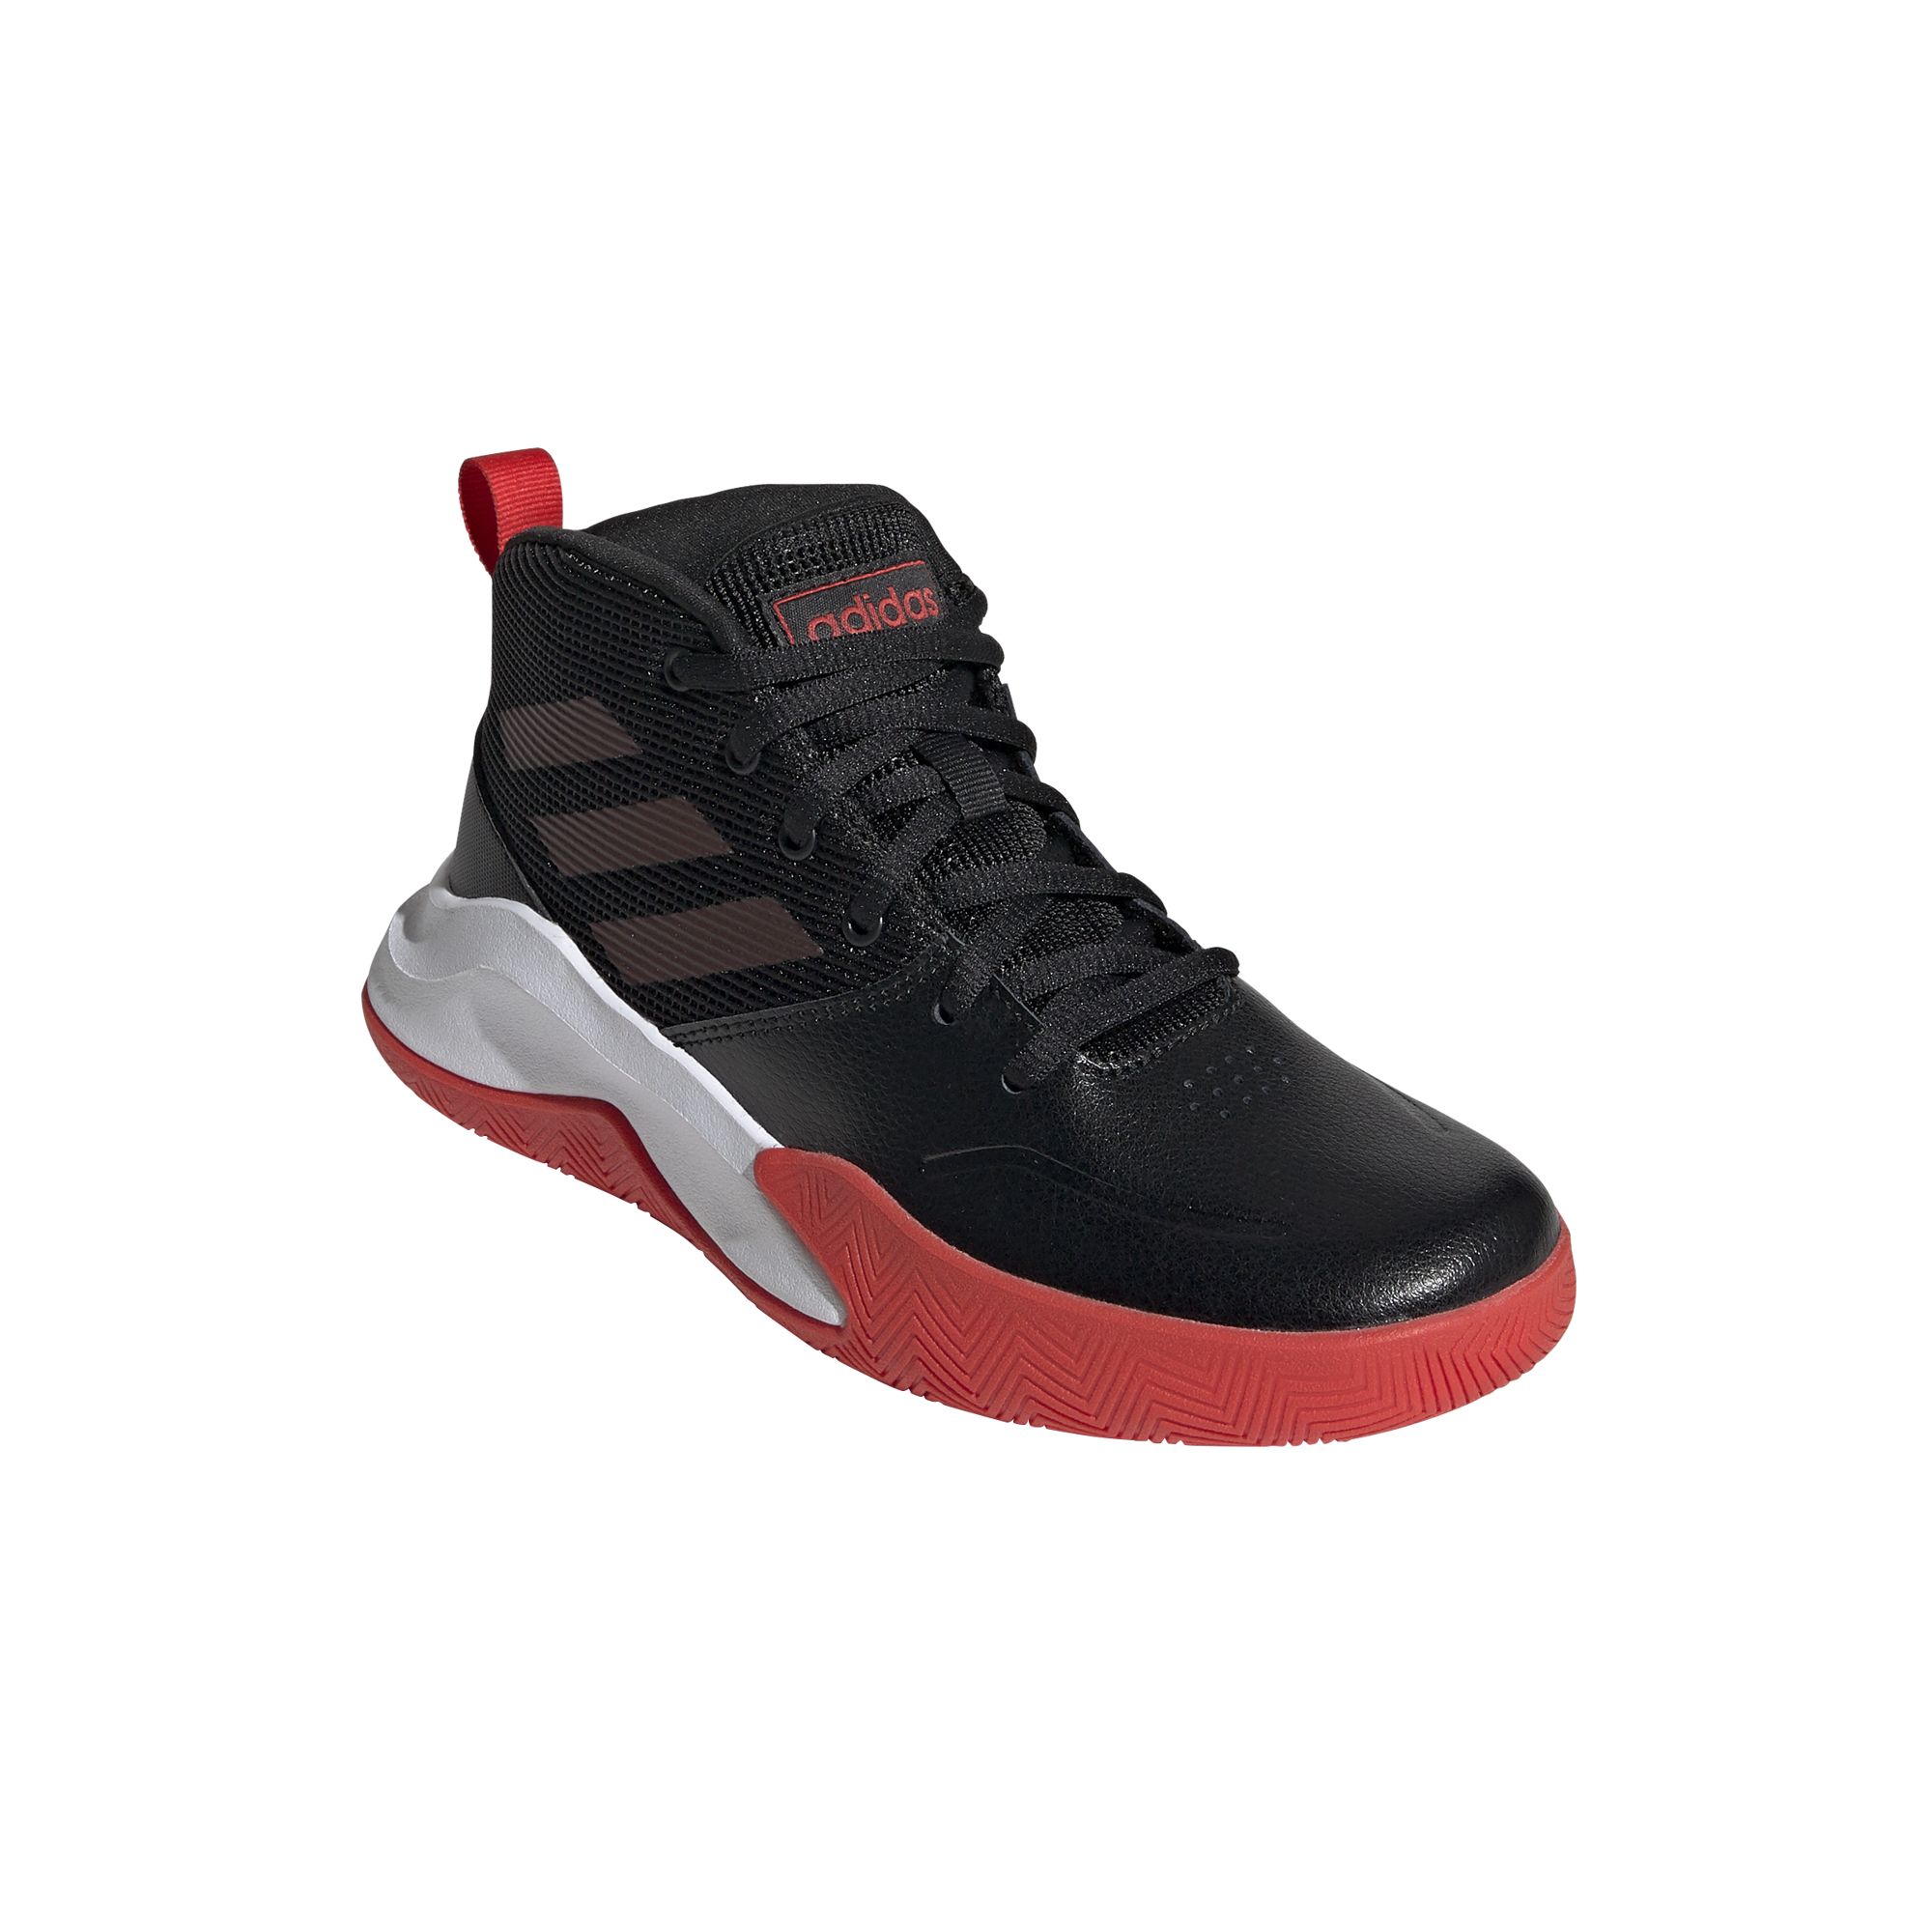 Fingerhut - adidas Kid's Own Game Basketball Shoe - Wide